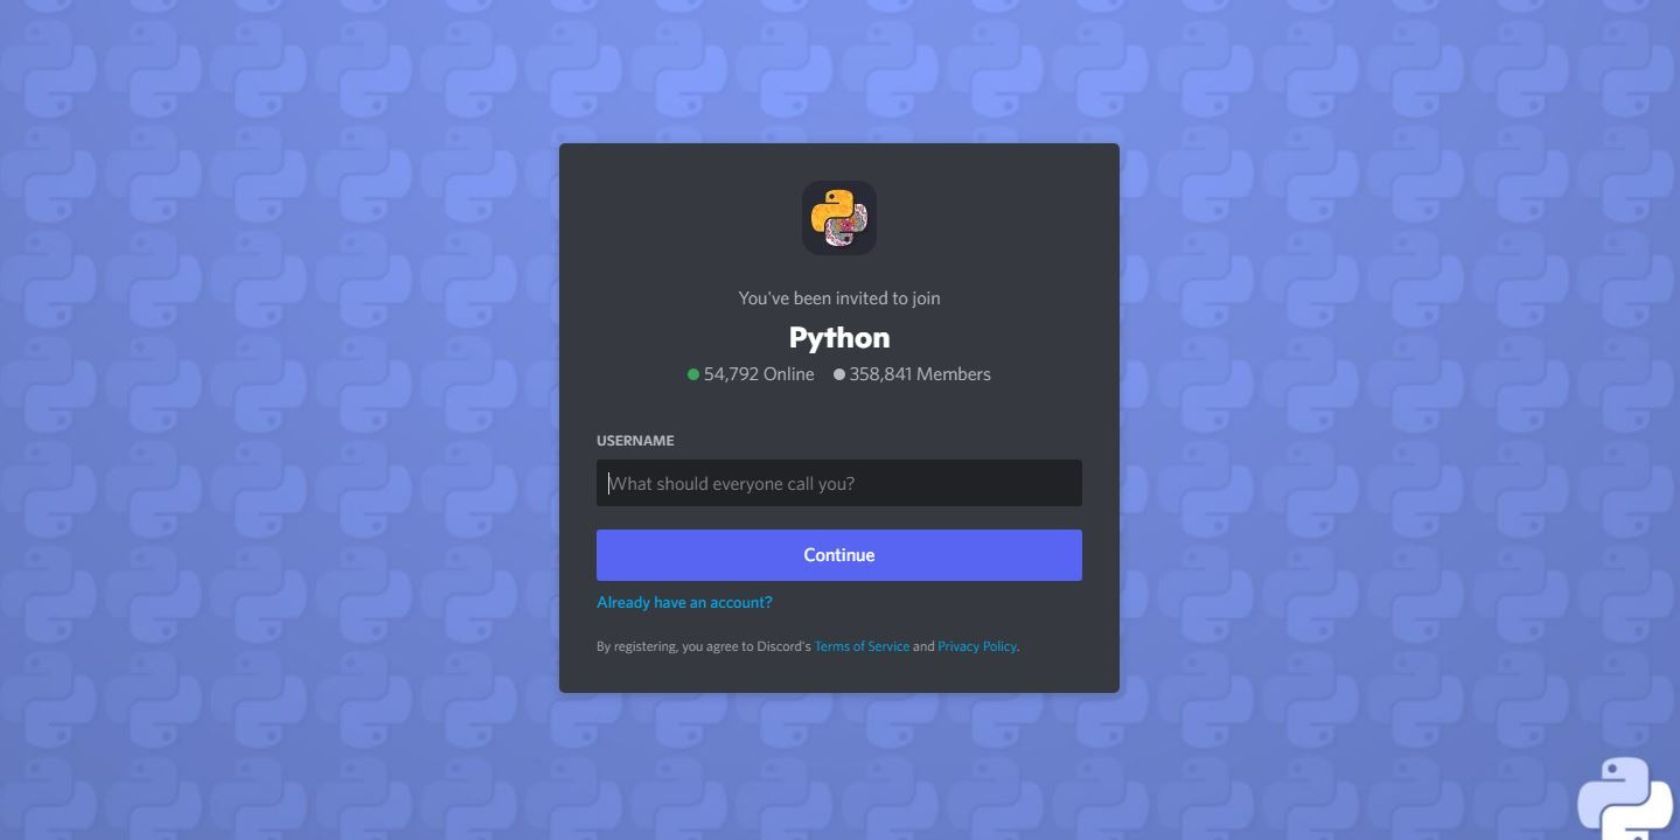 A screenshot of Python's invite page